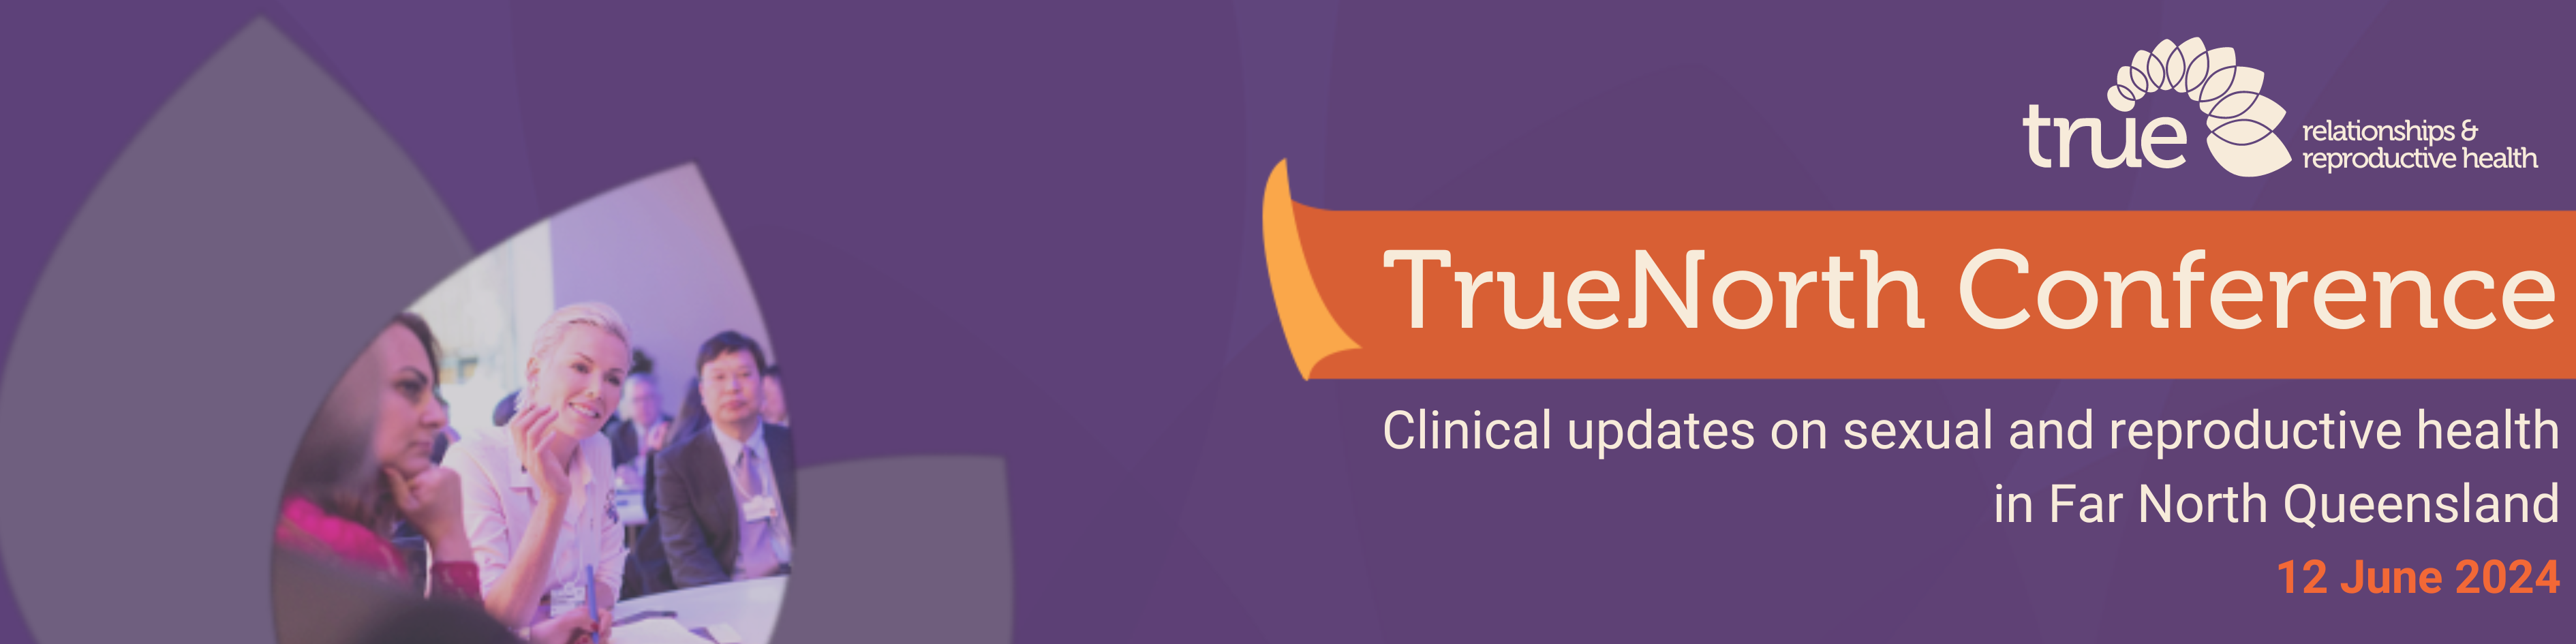 TrueNorth Conference - website banner